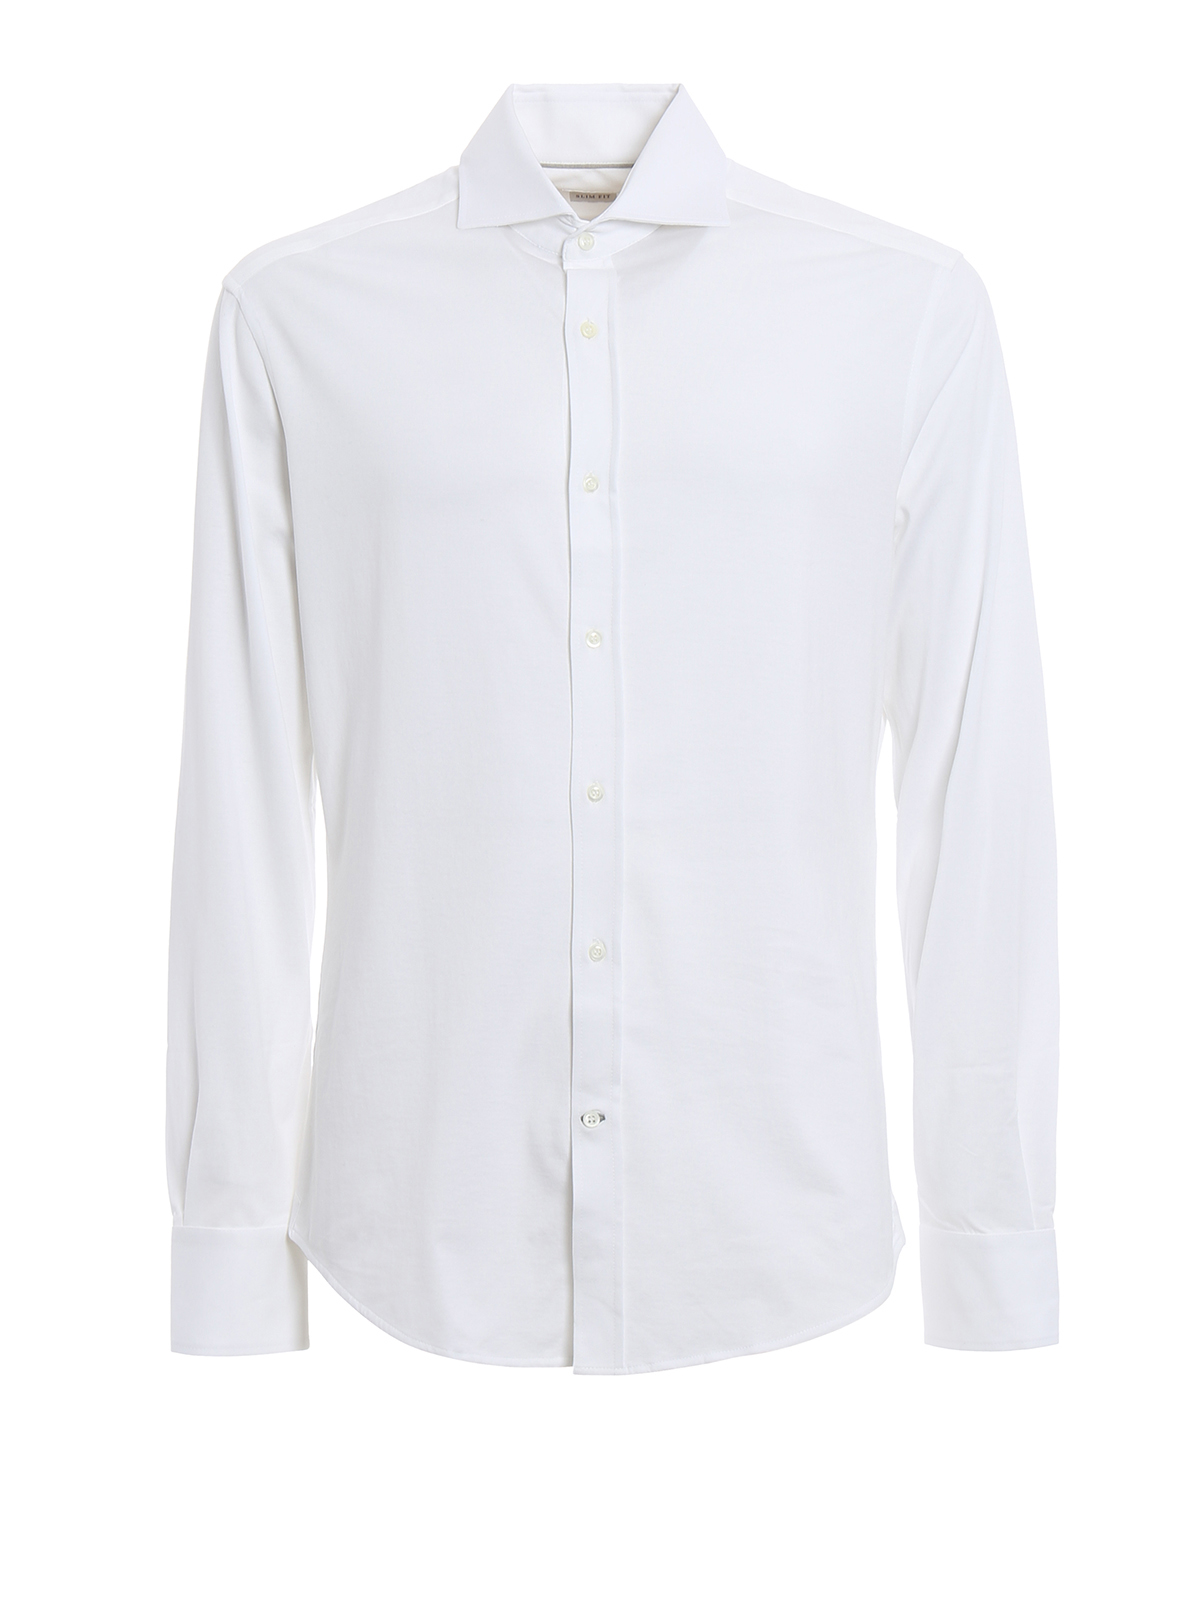 Shirts Brunello Cucinelli - Cotton jersey shirt - M0T656686C159